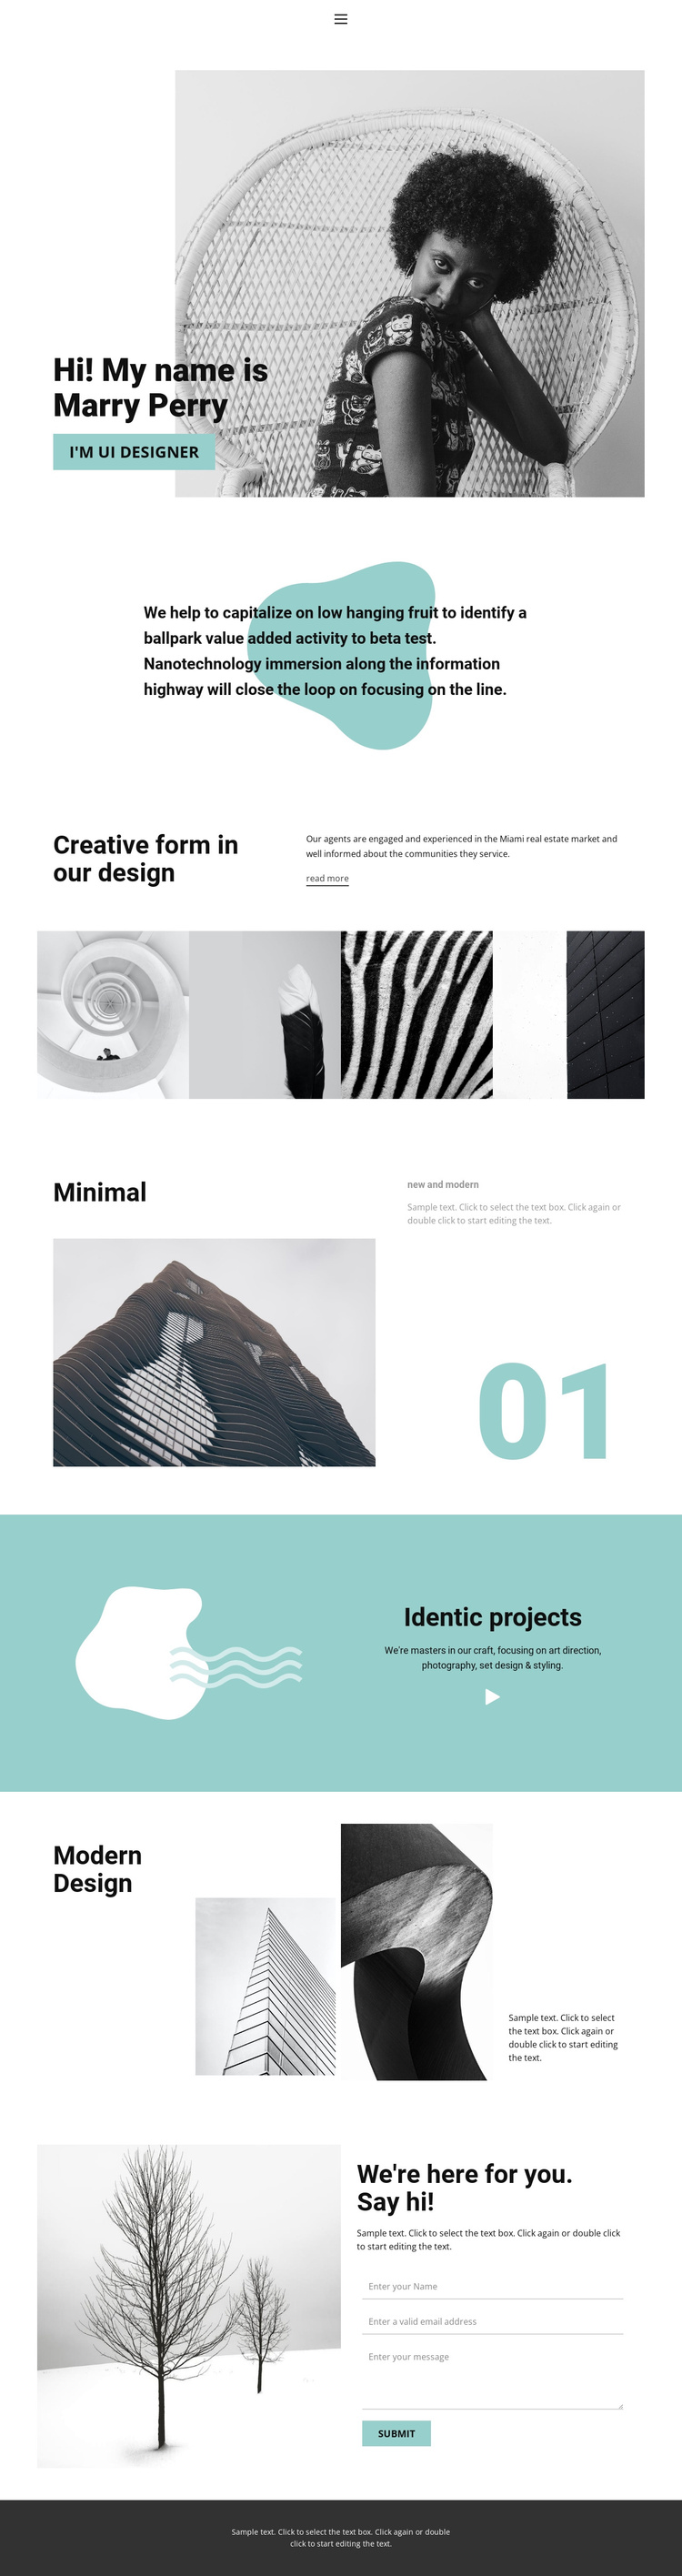 Web design from our studio Joomla Template